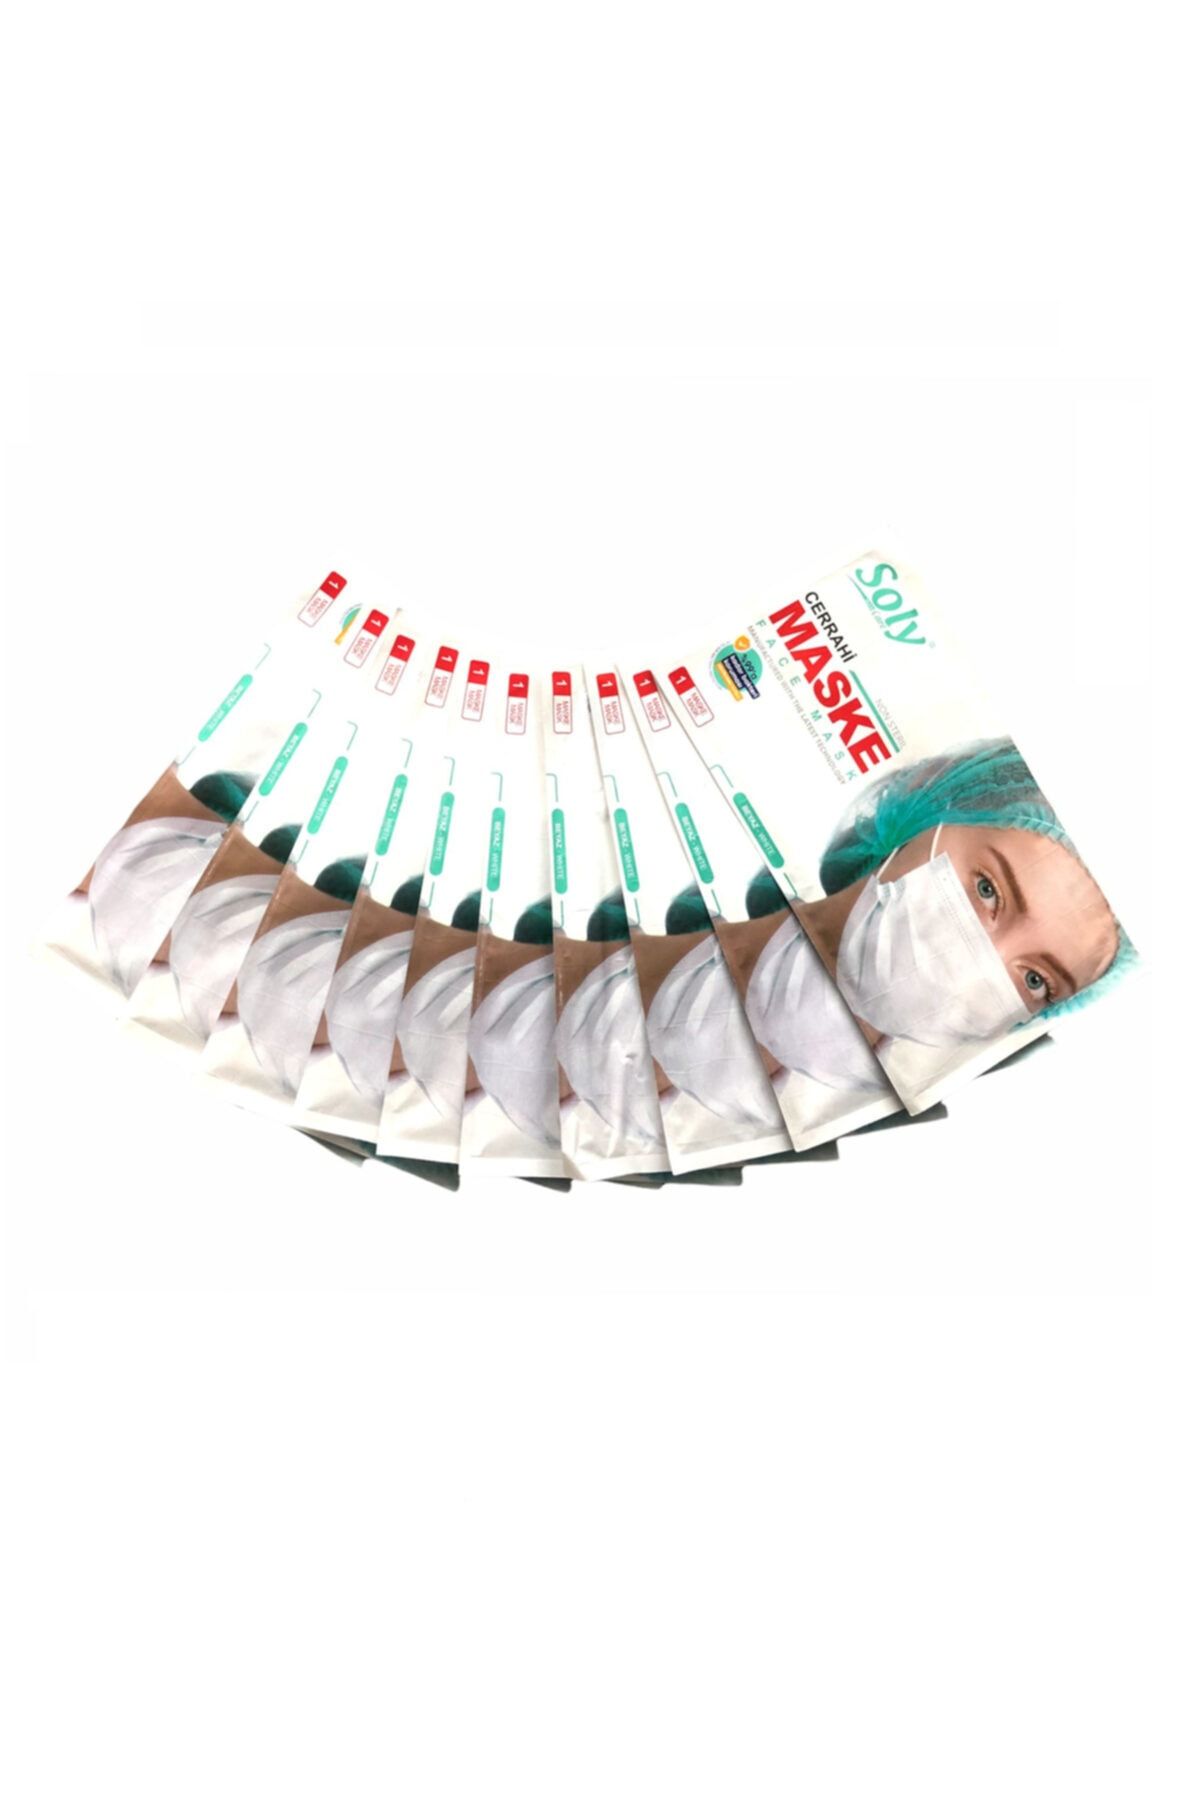 Soly Care 3 Katlı Tekli Kağıt Ambalajlı Meltblown Beyaz Telli Cerrahi Maske 10'lu